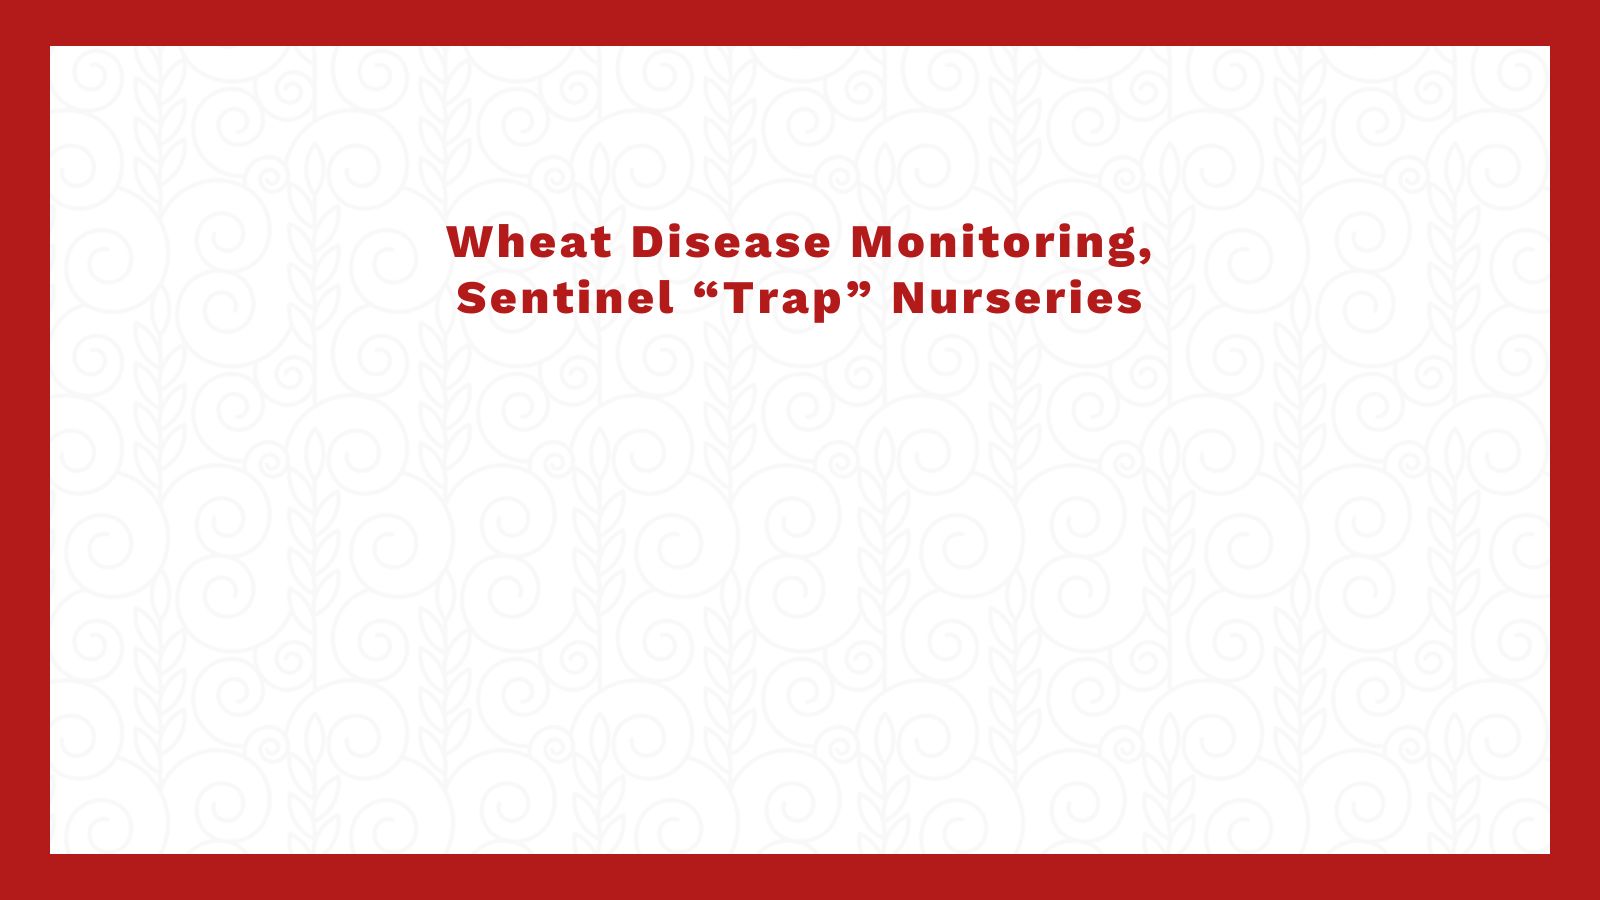 Wheat Disease Monitoring, Sentinel “Trap” Nurseries